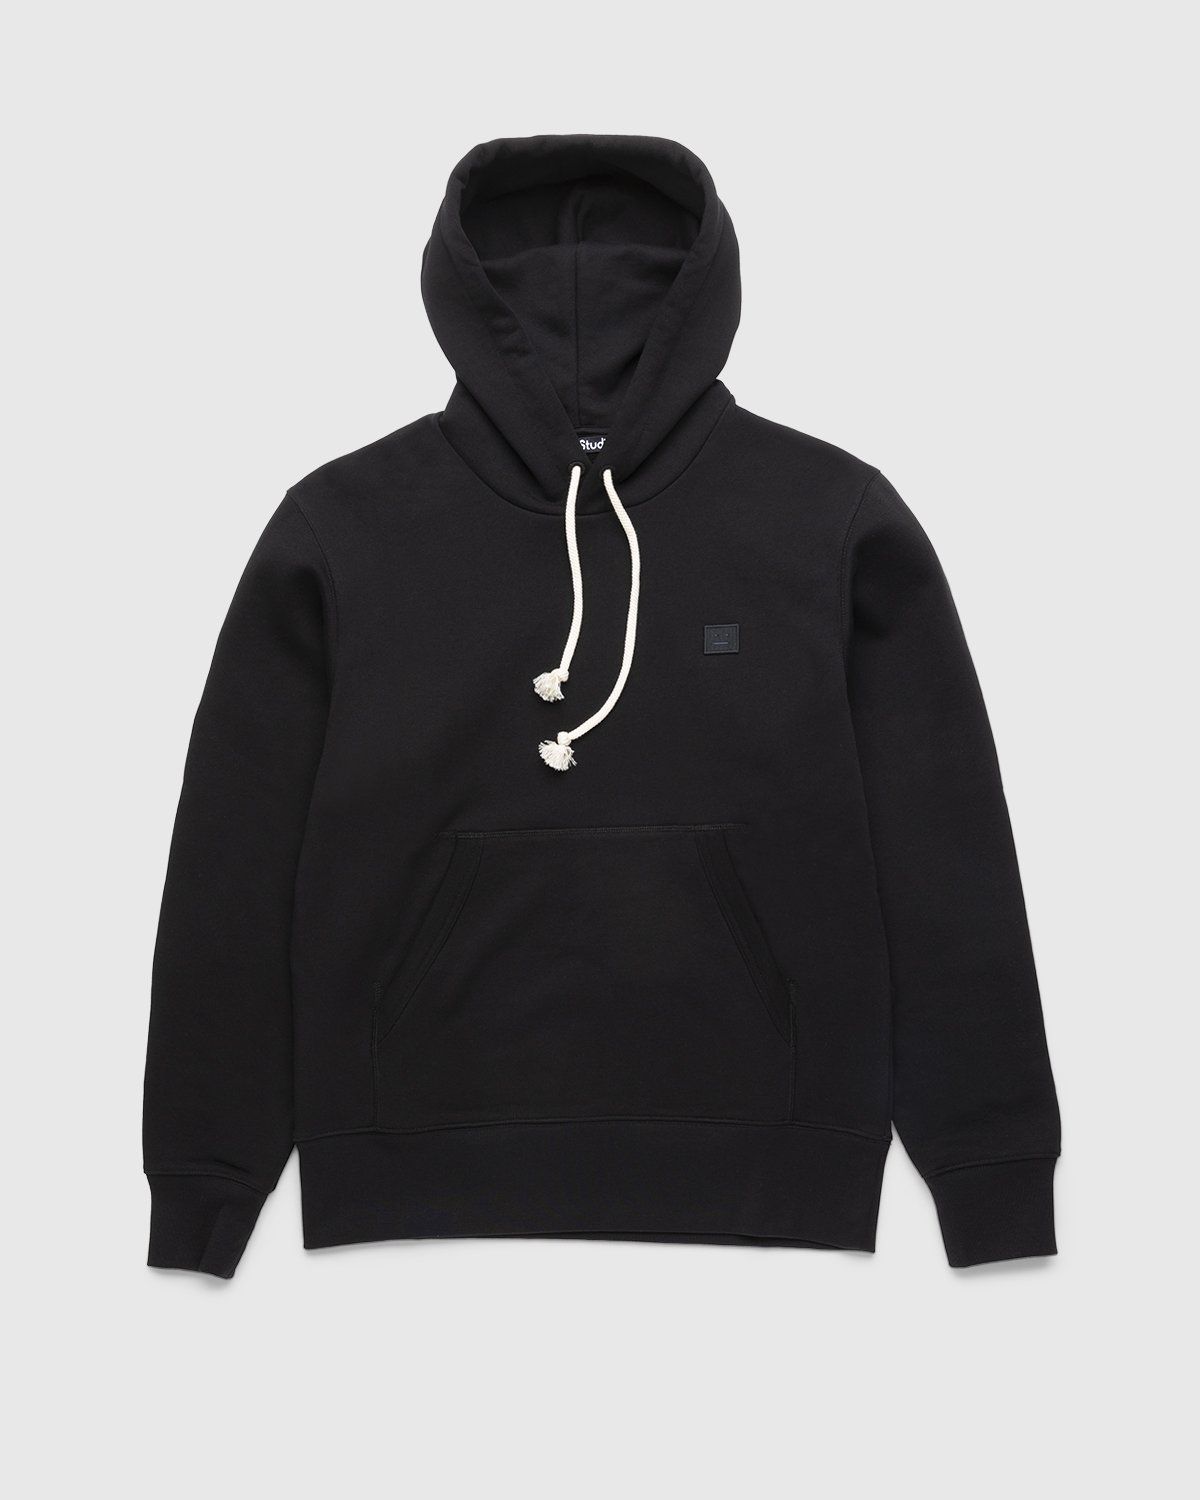 Acne Studios – Organic Cotton Hooded Sweatshirt Black - Sweats - Black - Image 1